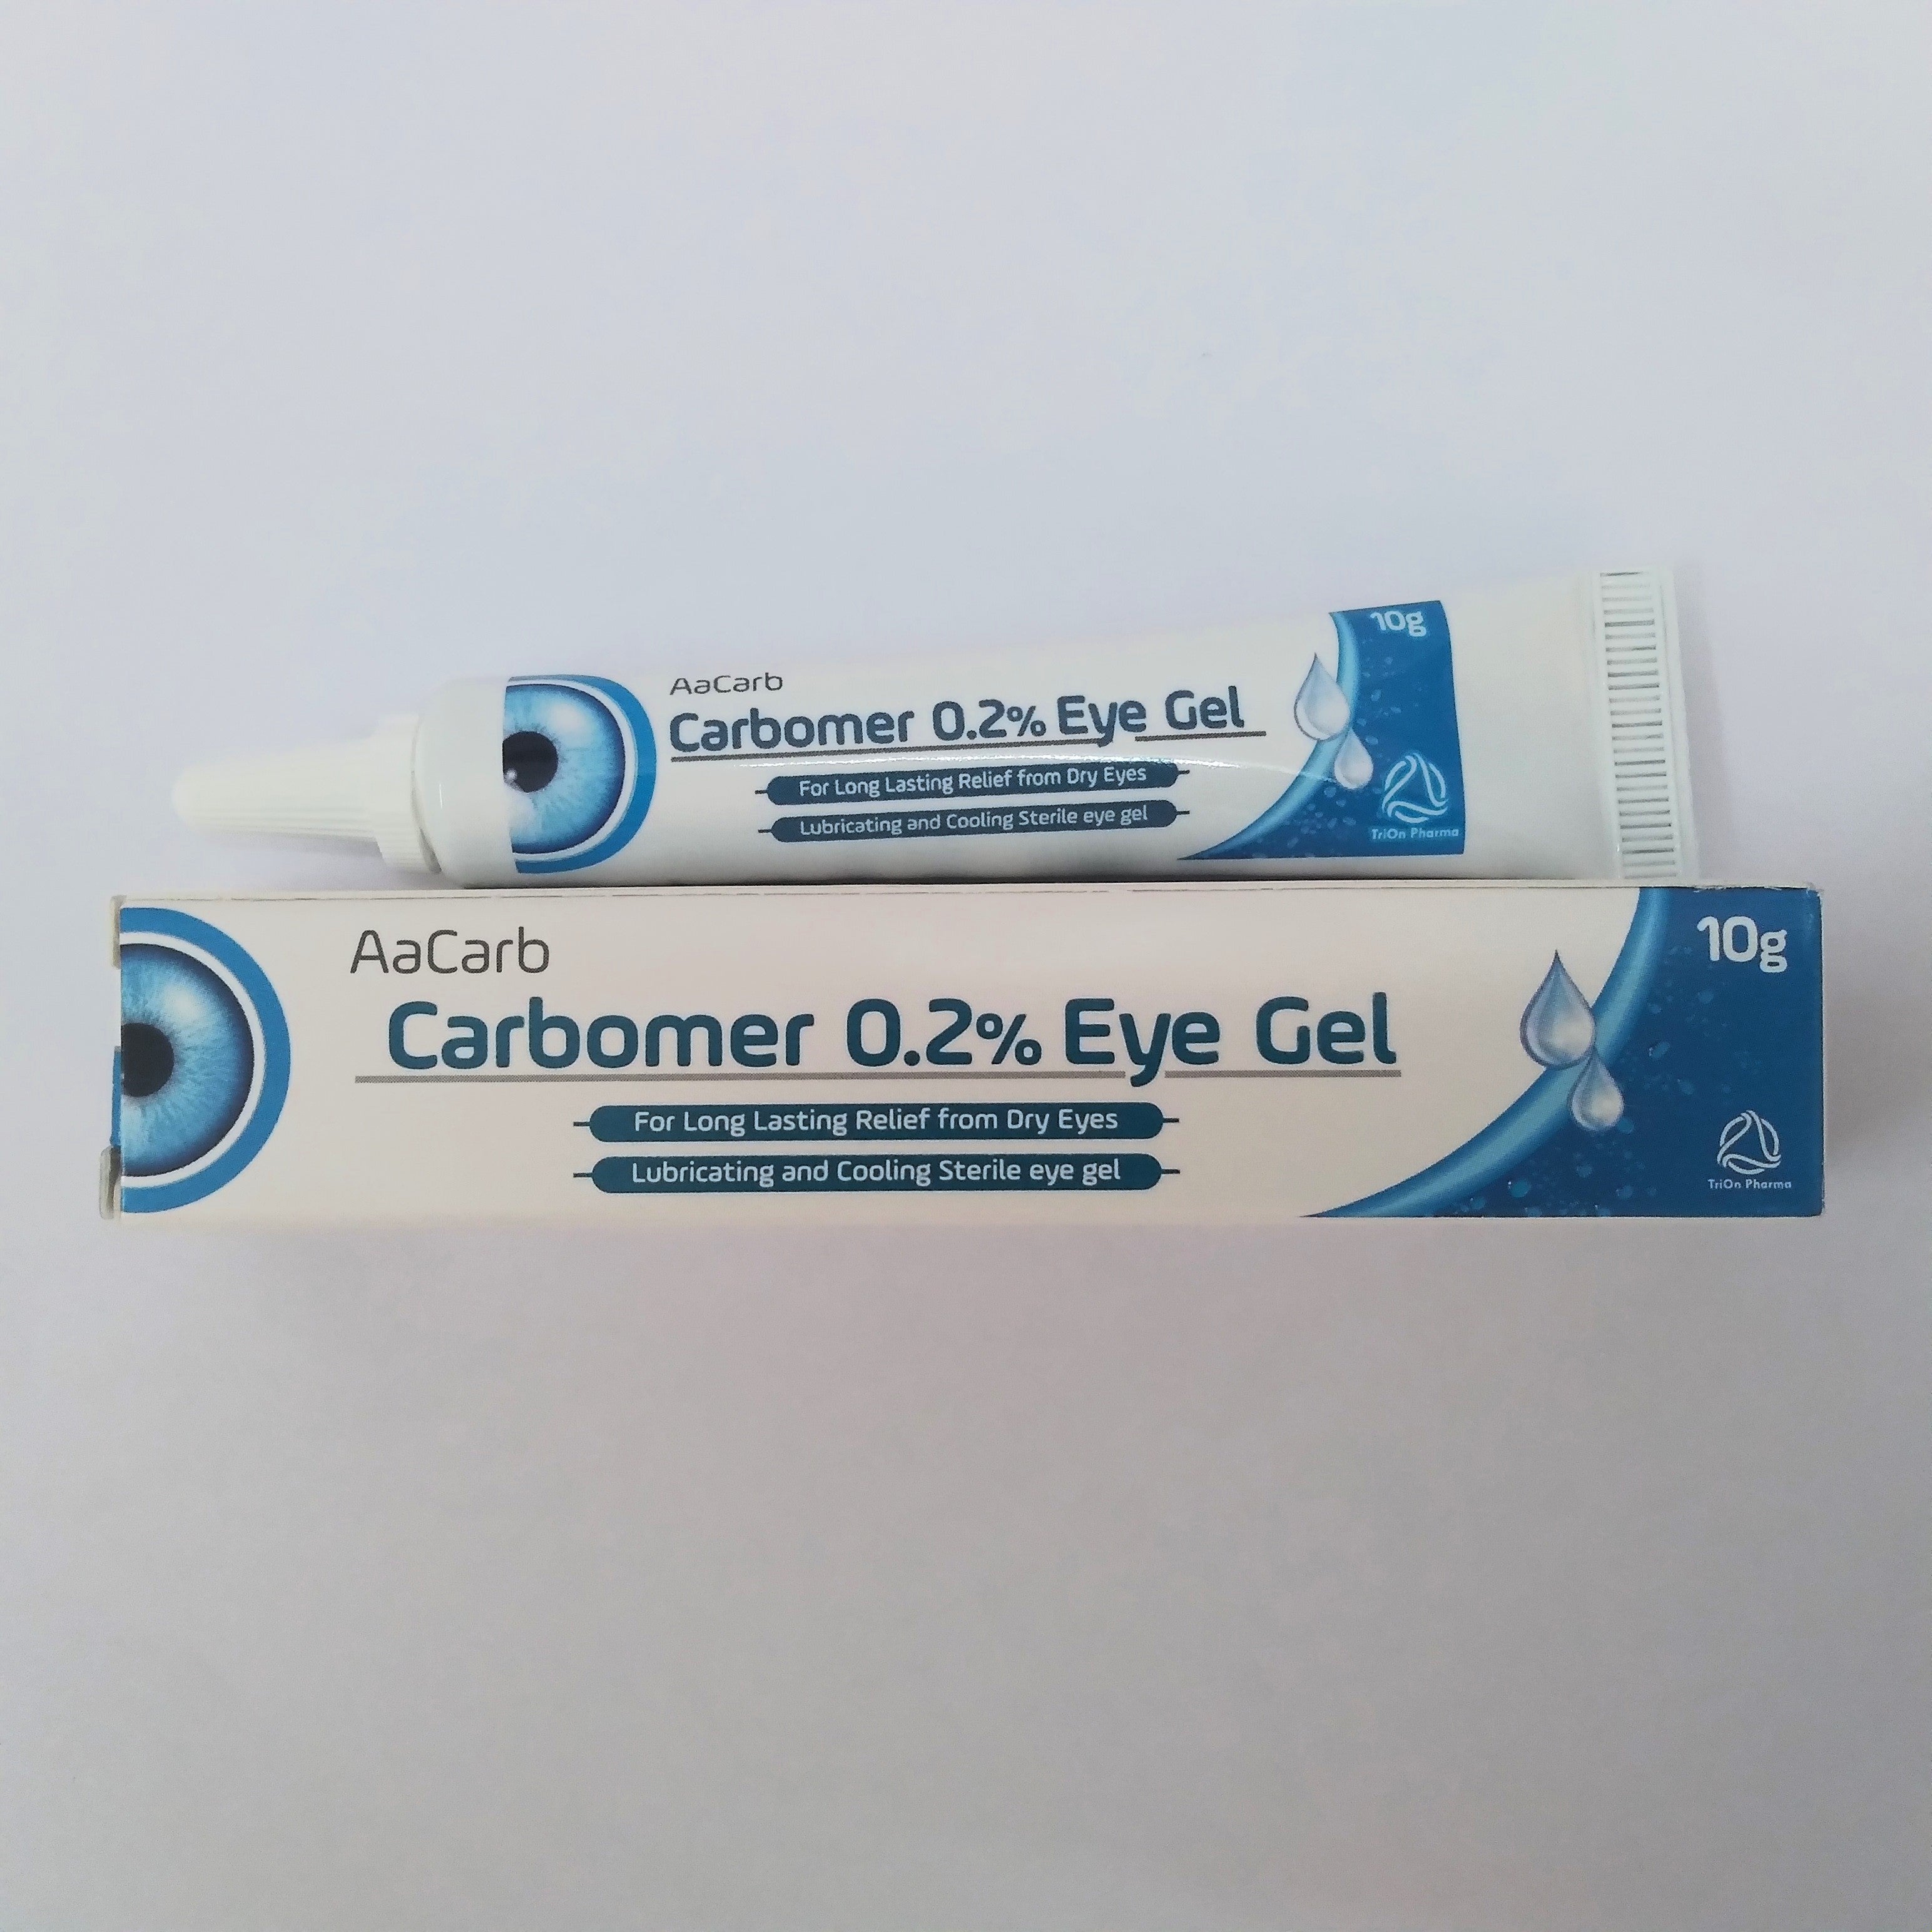 Contaminate eye gel used to treat dry eyes